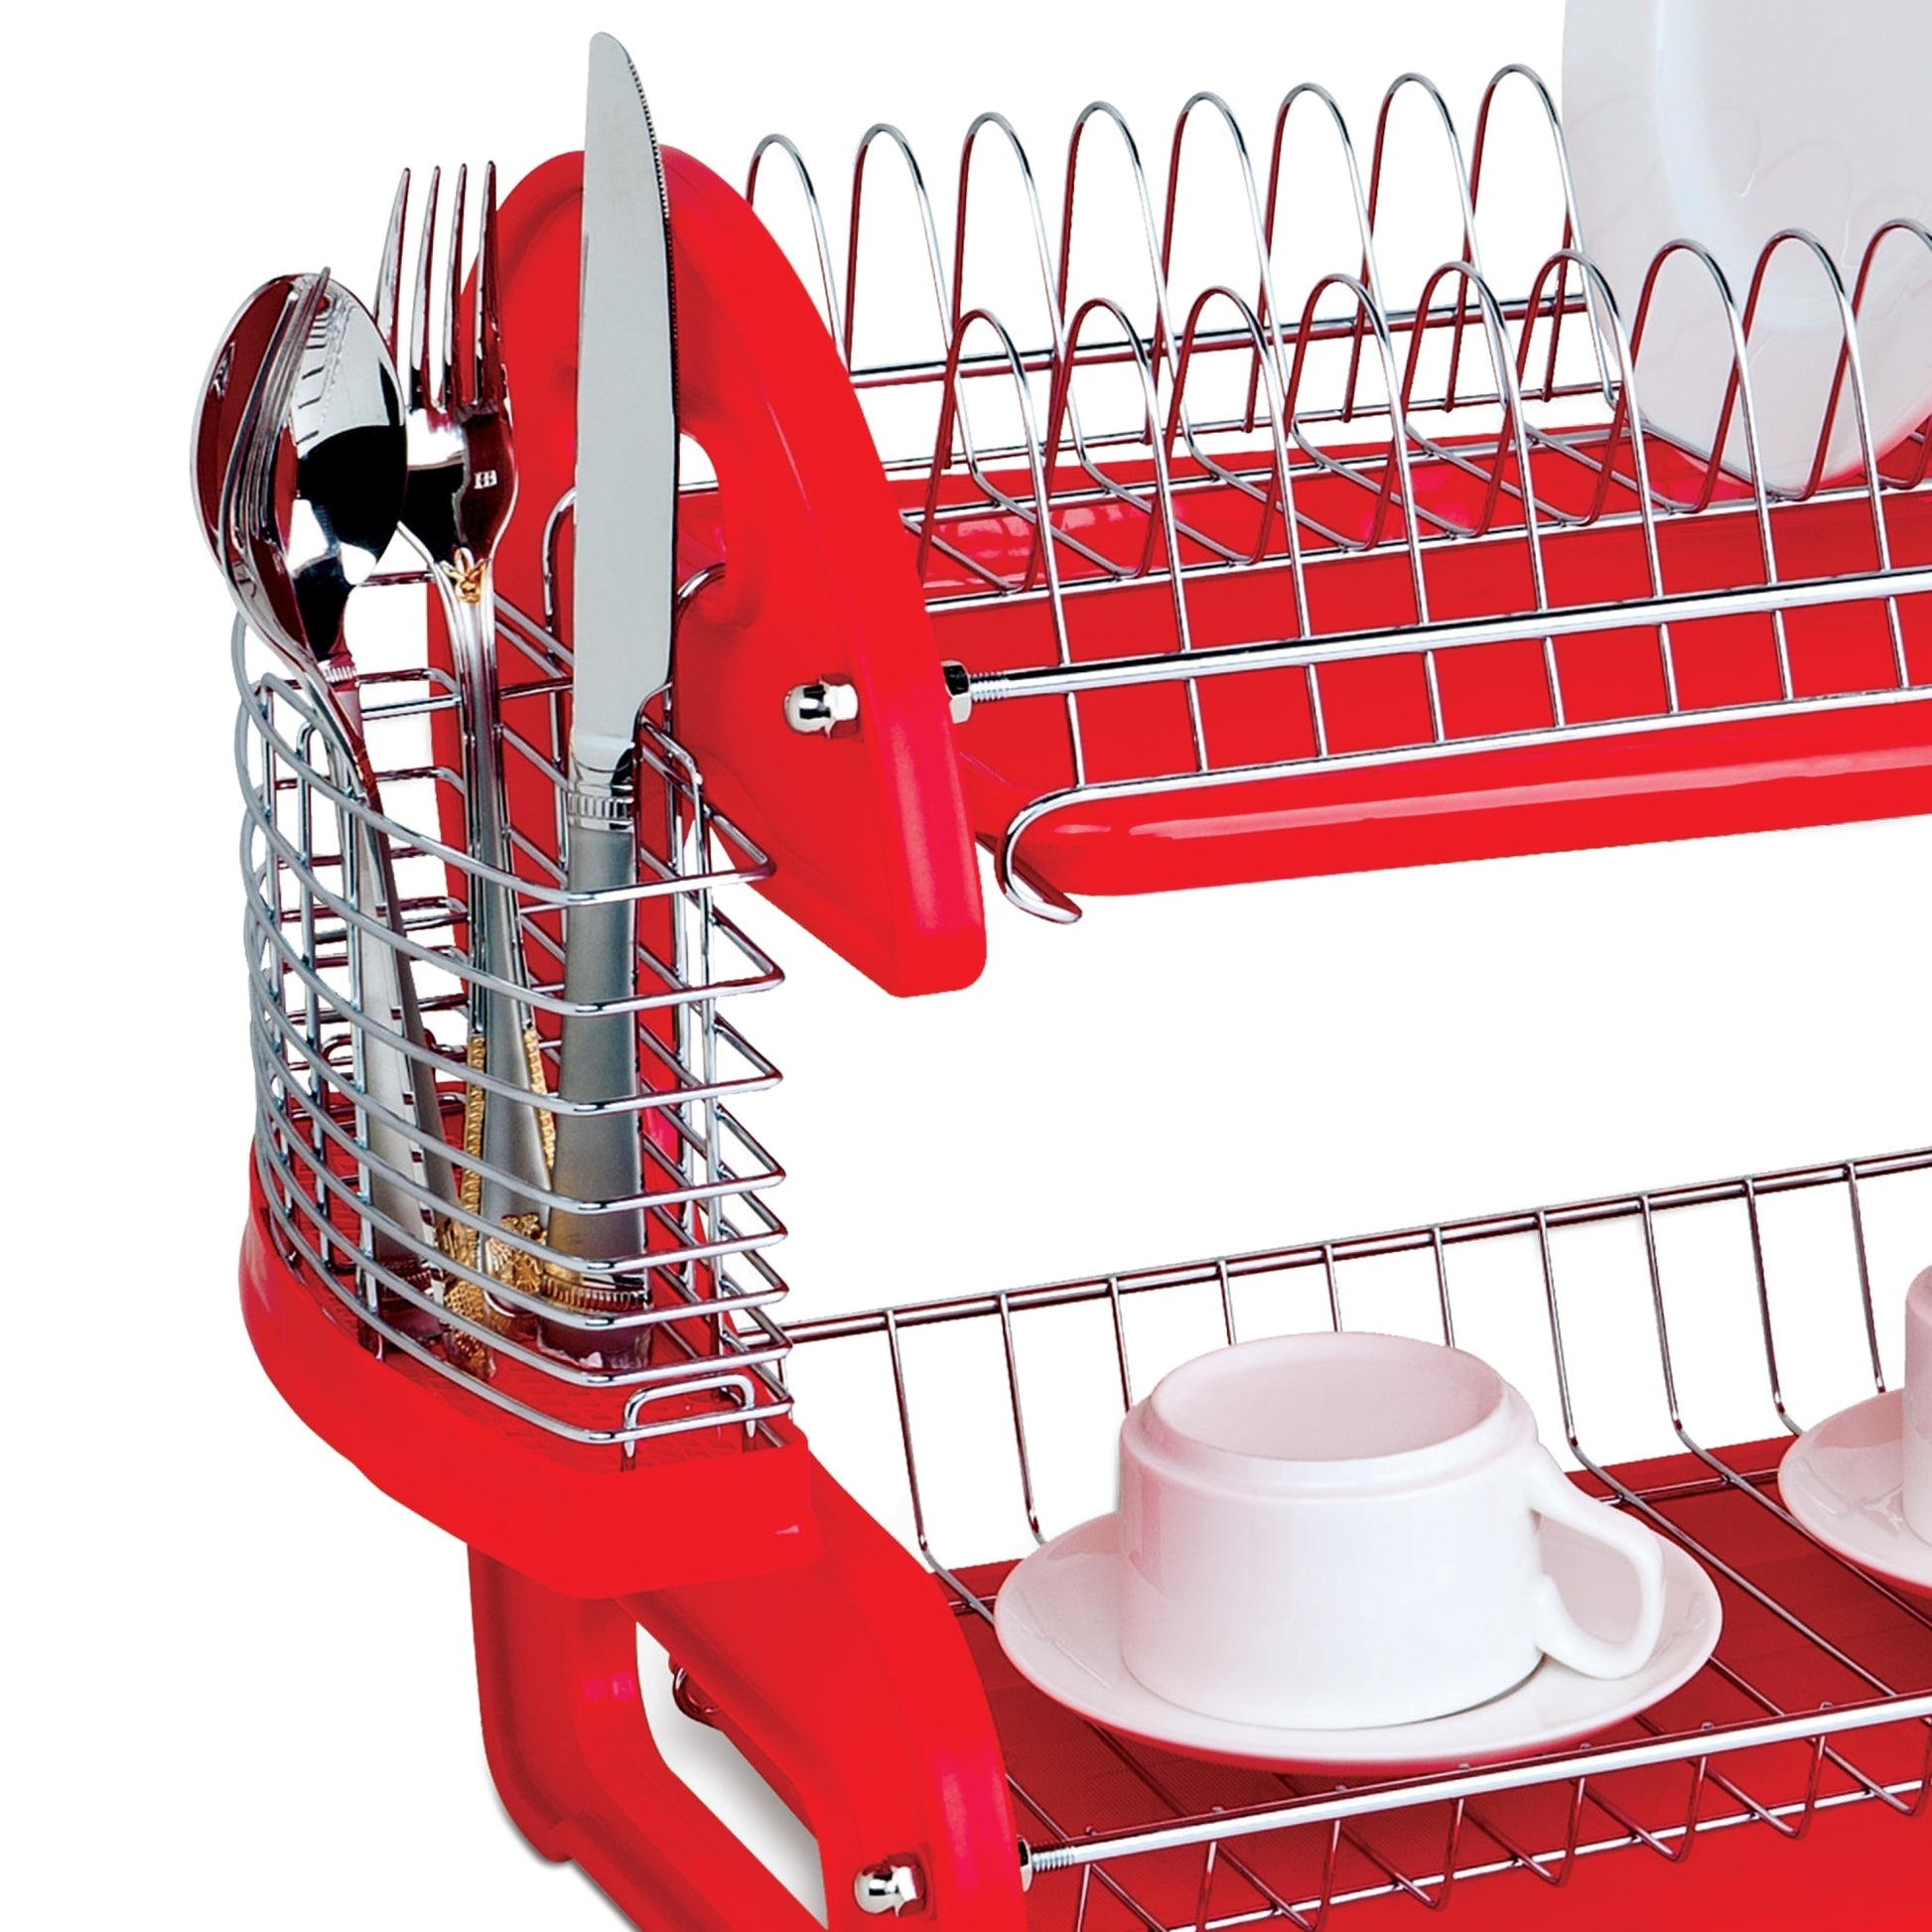 Home Basics 3 Piece Dish Rack, Red, KITCHEN ORGANIZATION